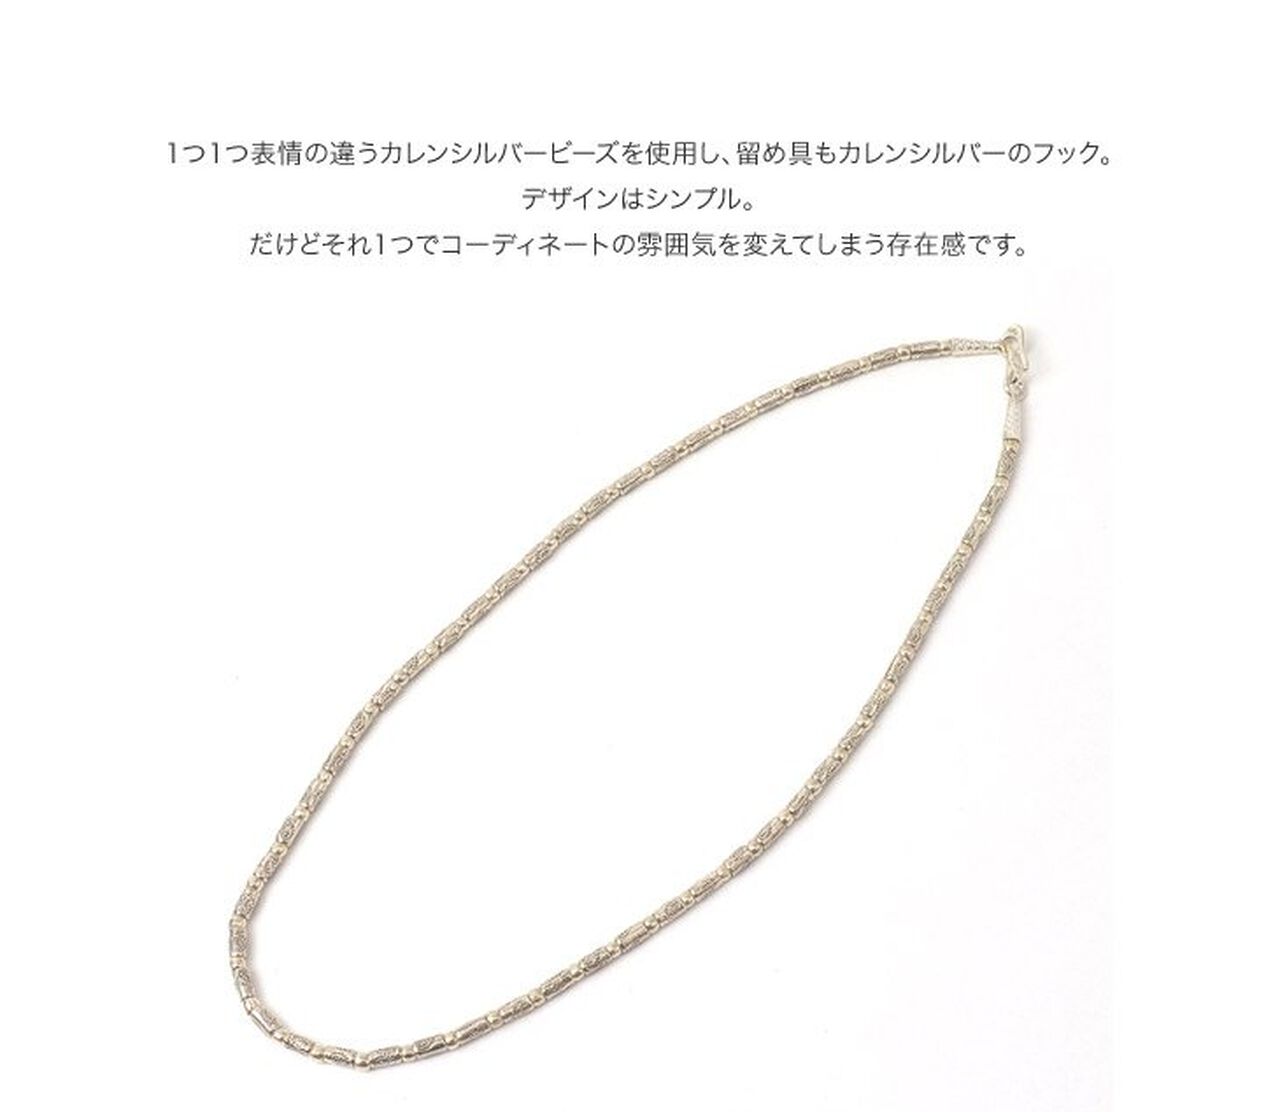 Karen silver beaded necklace (fish),Silver, large image number 3